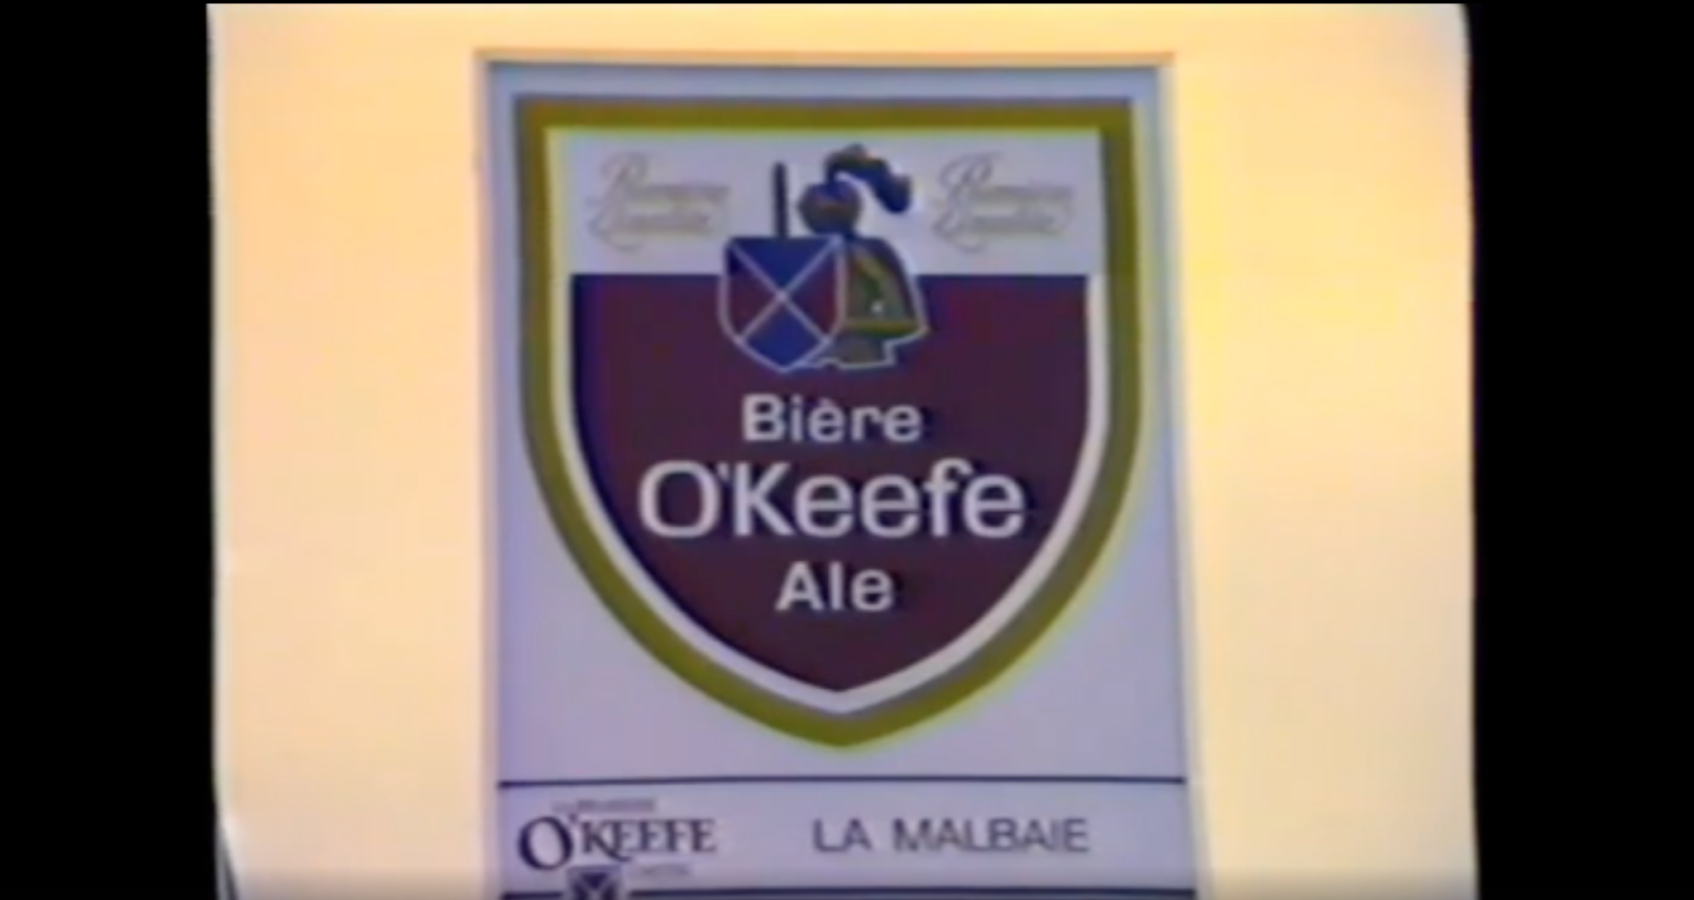 Souvenir de la brasserie O'keefe à La Malbaie (Gaétan Long)